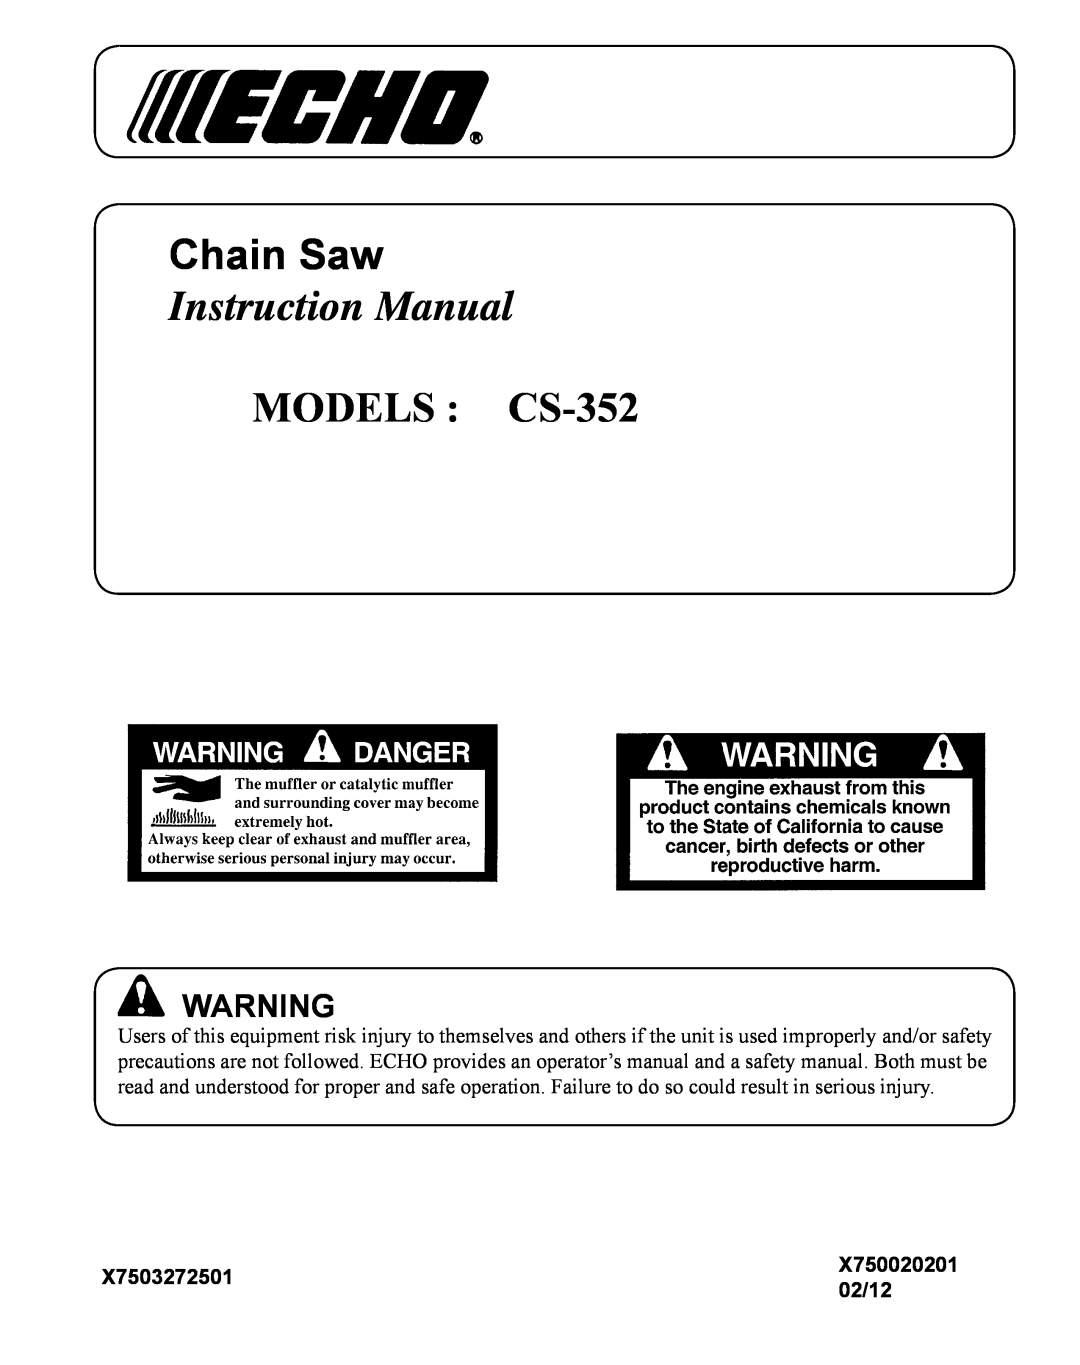 Echo X750020201 instruction manual X7503272501, 02/12, Chain Saw, MODELS CS-352 